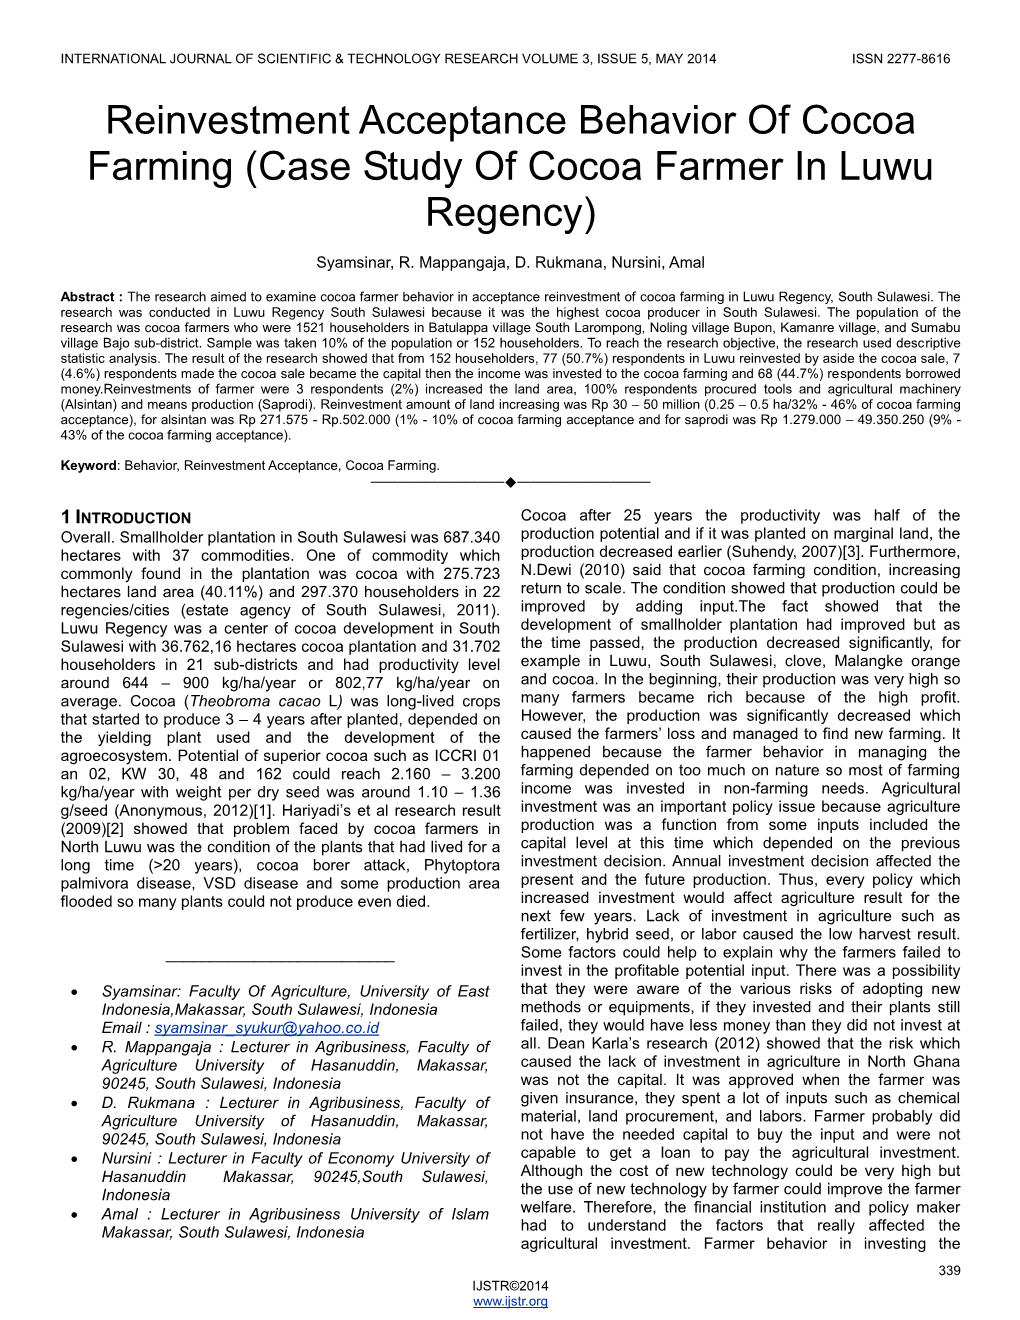 Reinvestment Acceptance Behavior of Cocoa Farming (Case Study of Cocoa Farmer in Luwu Regency)